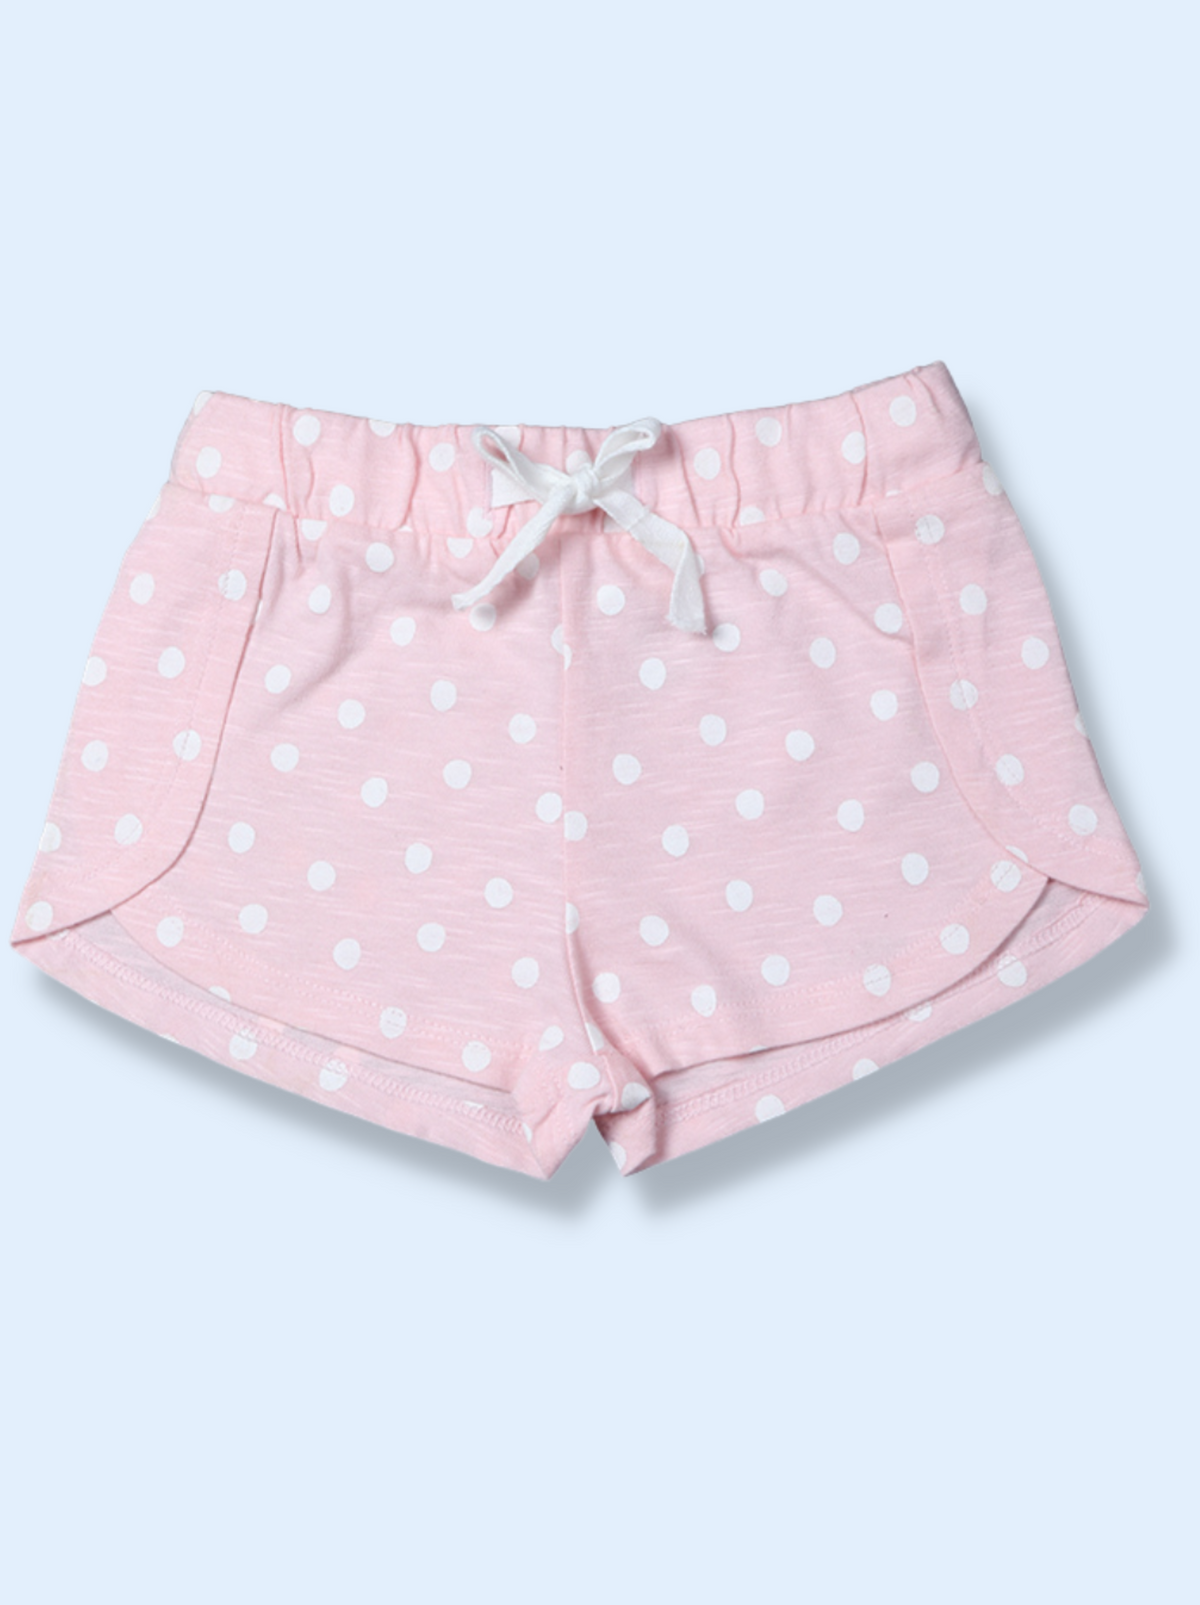 Babies Pink Polka Print Cotton jersey knit Pant